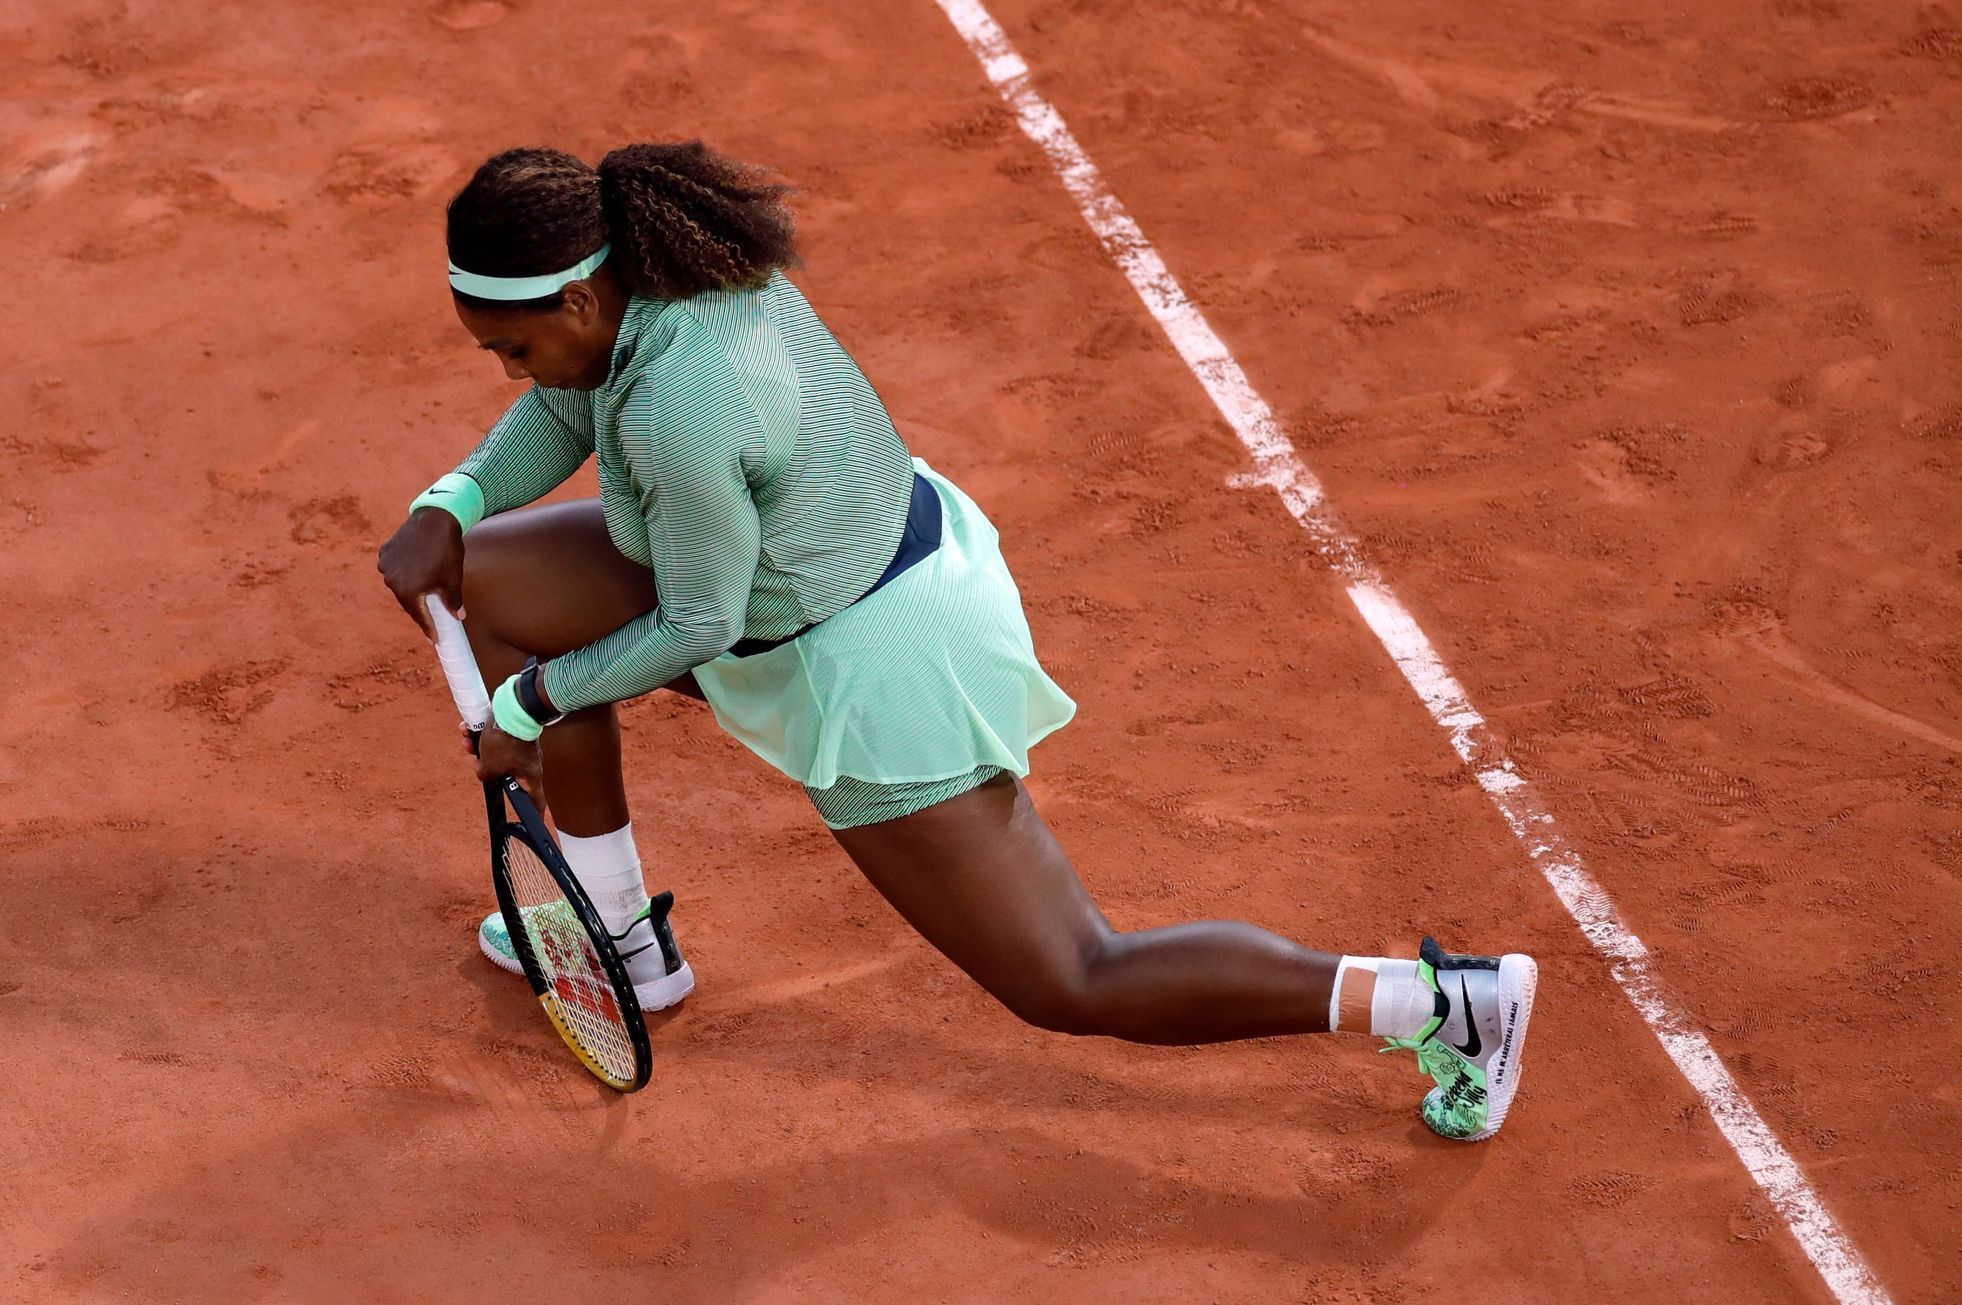 French Open, 2. den (Serena Williamsová)